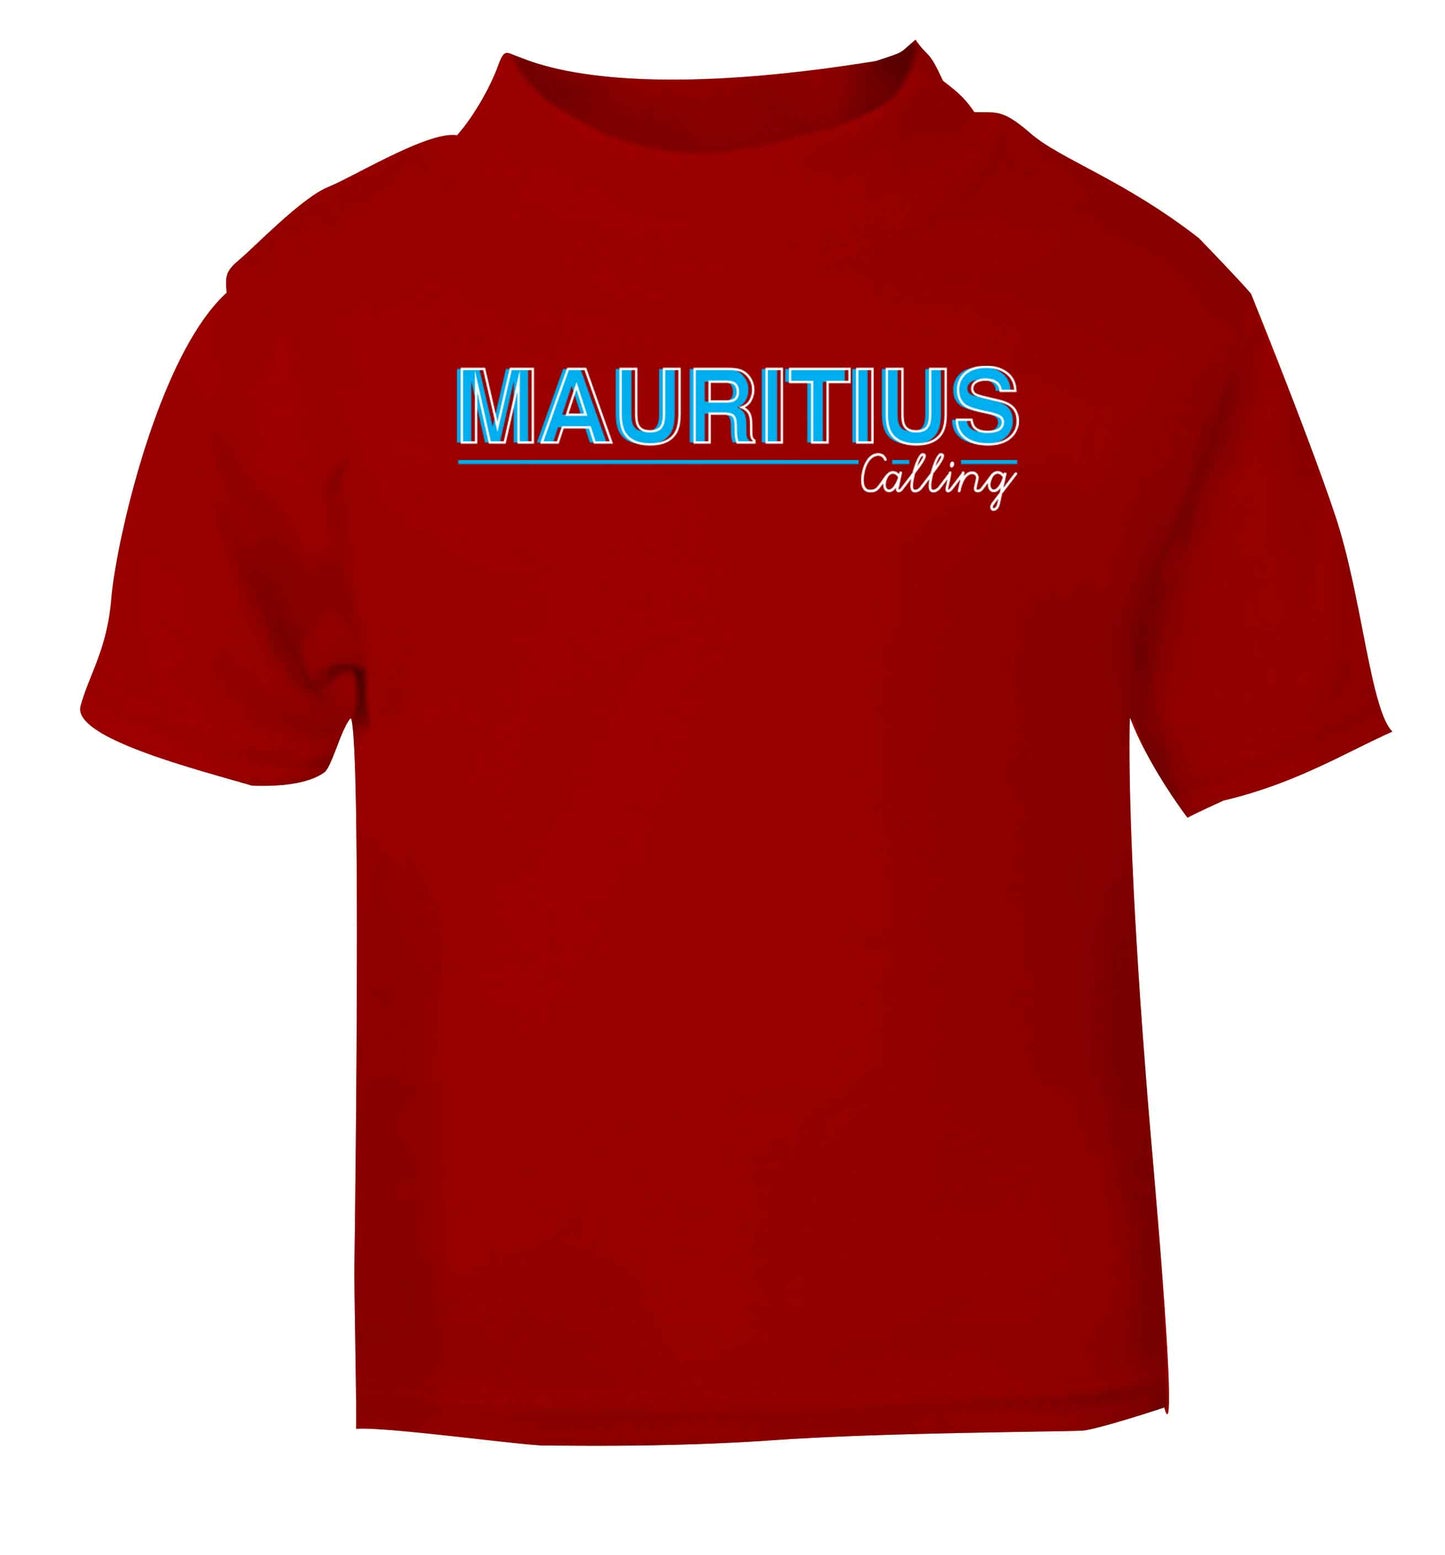 Mauritius calling red Baby Toddler Tshirt 2 Years